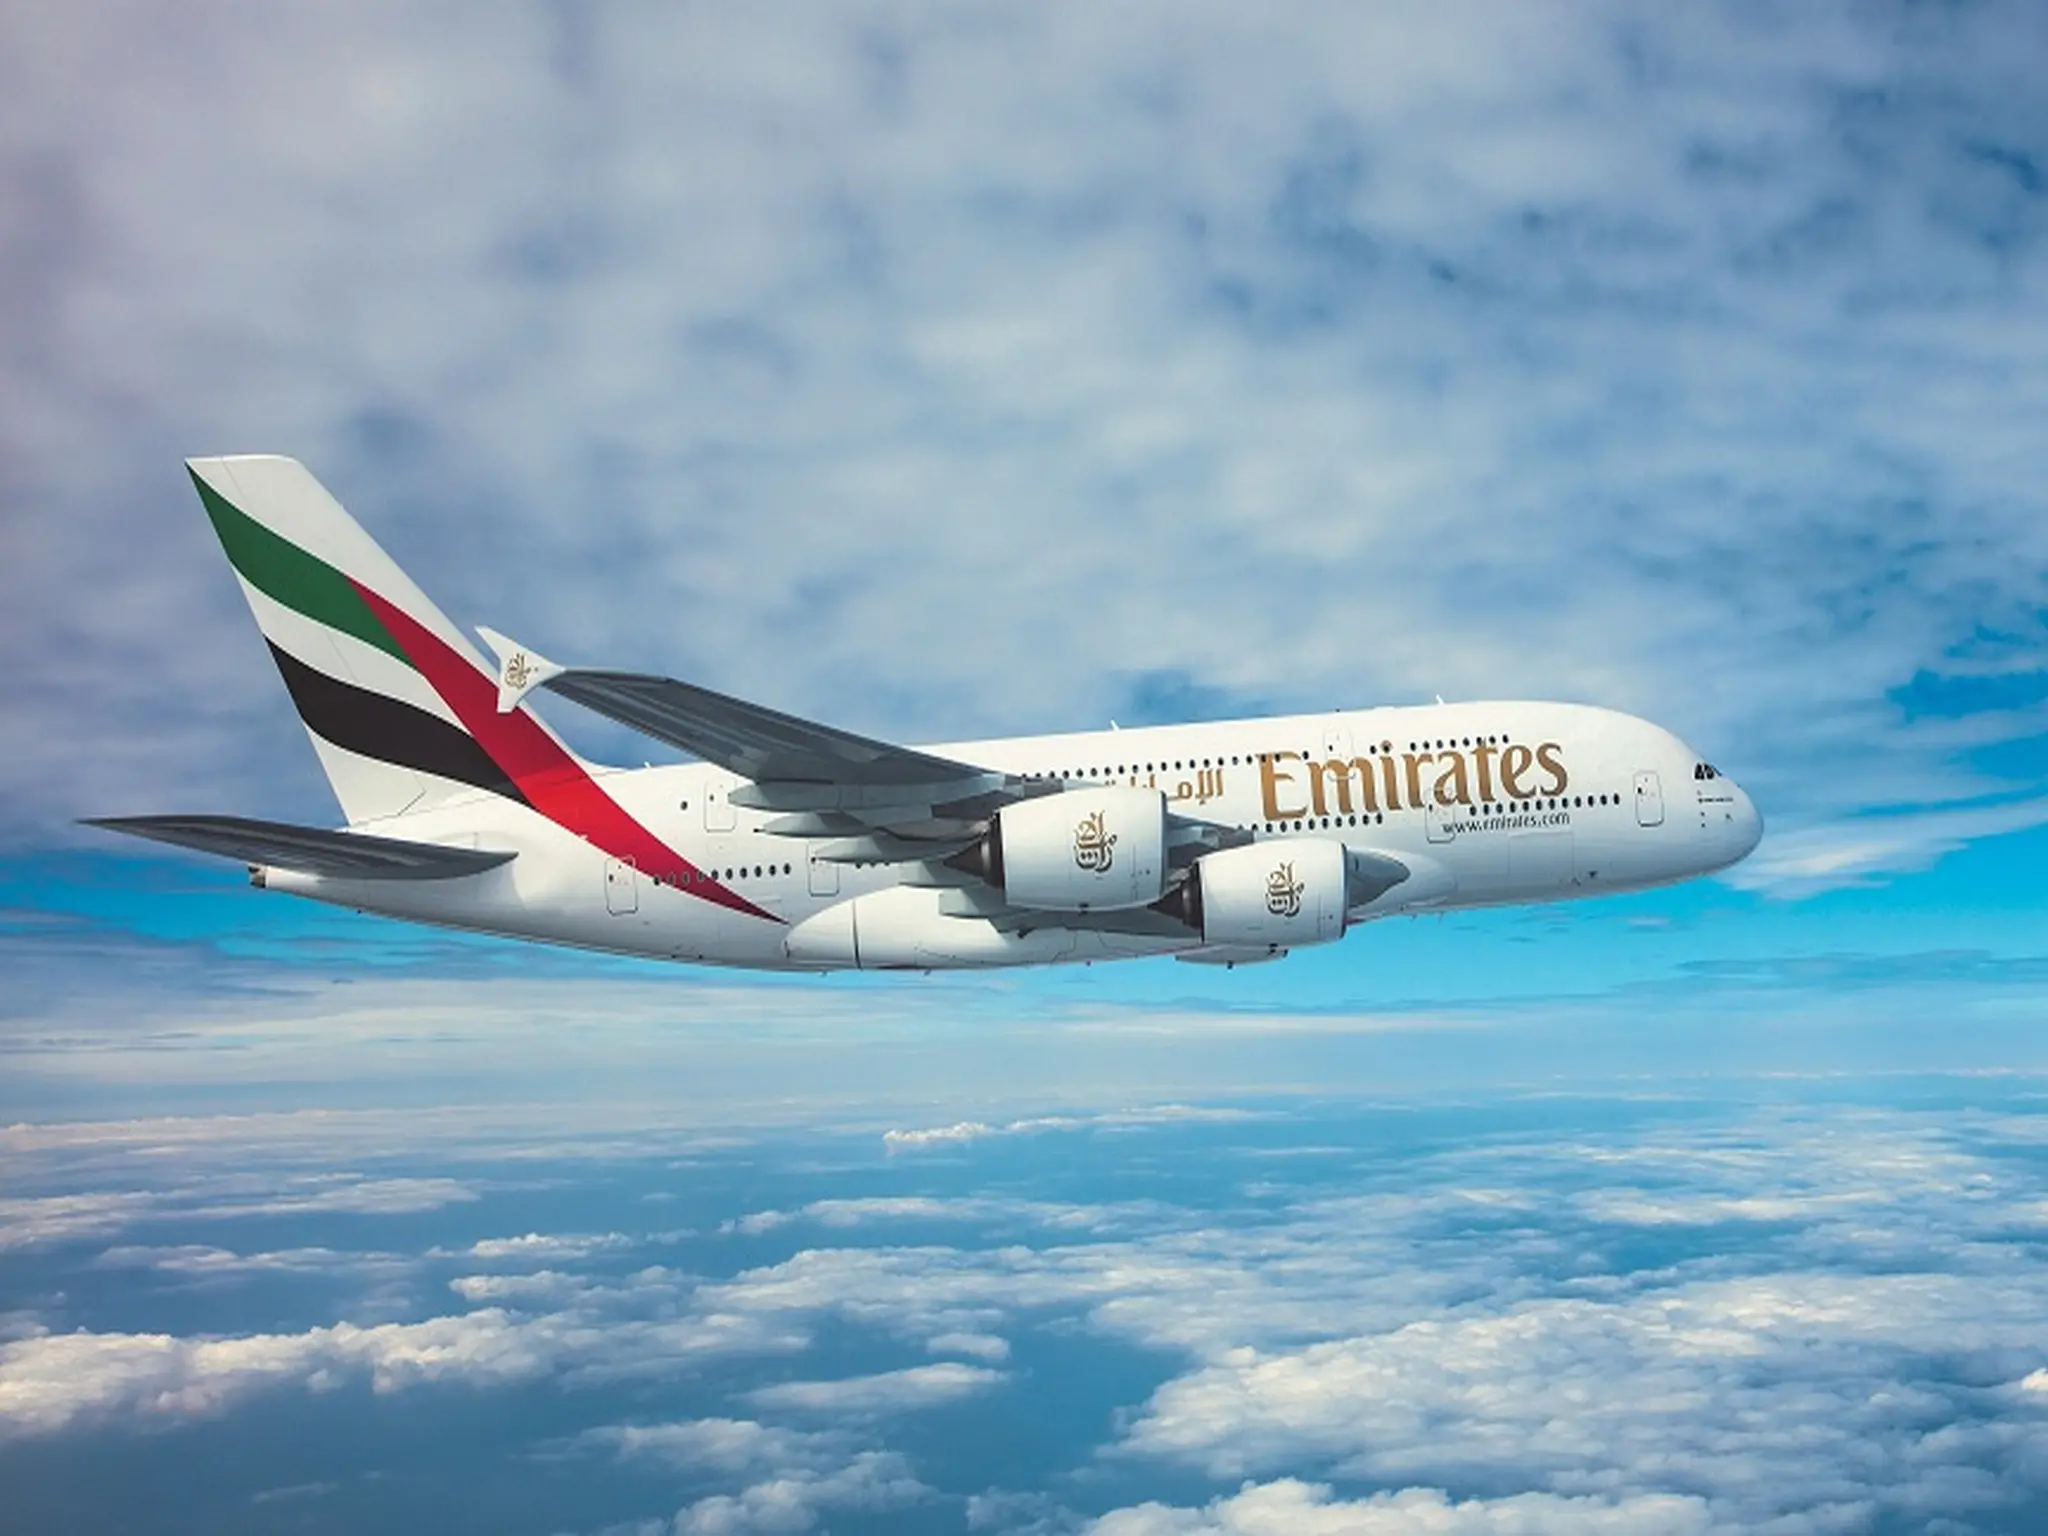 Emirates Airlines announces the suspension of flights to Sudan